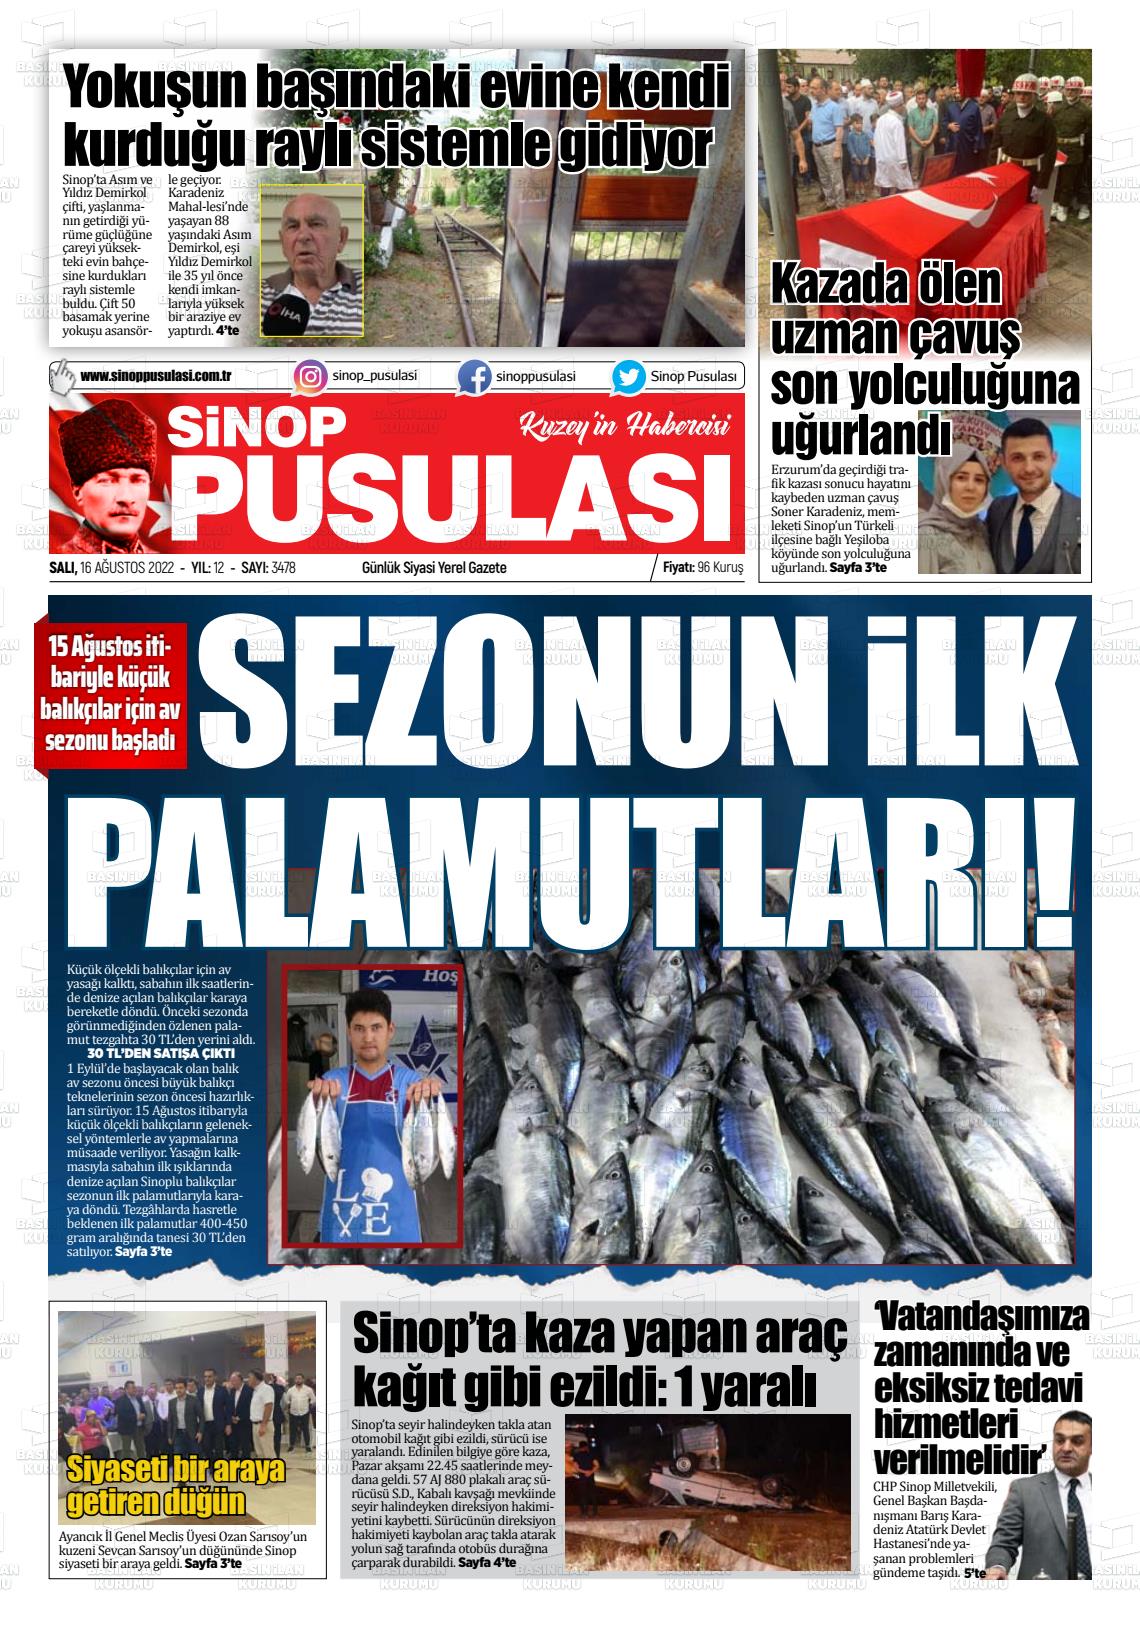 16 Ağustos 2022 Sinop Pusulası Gazete Manşeti